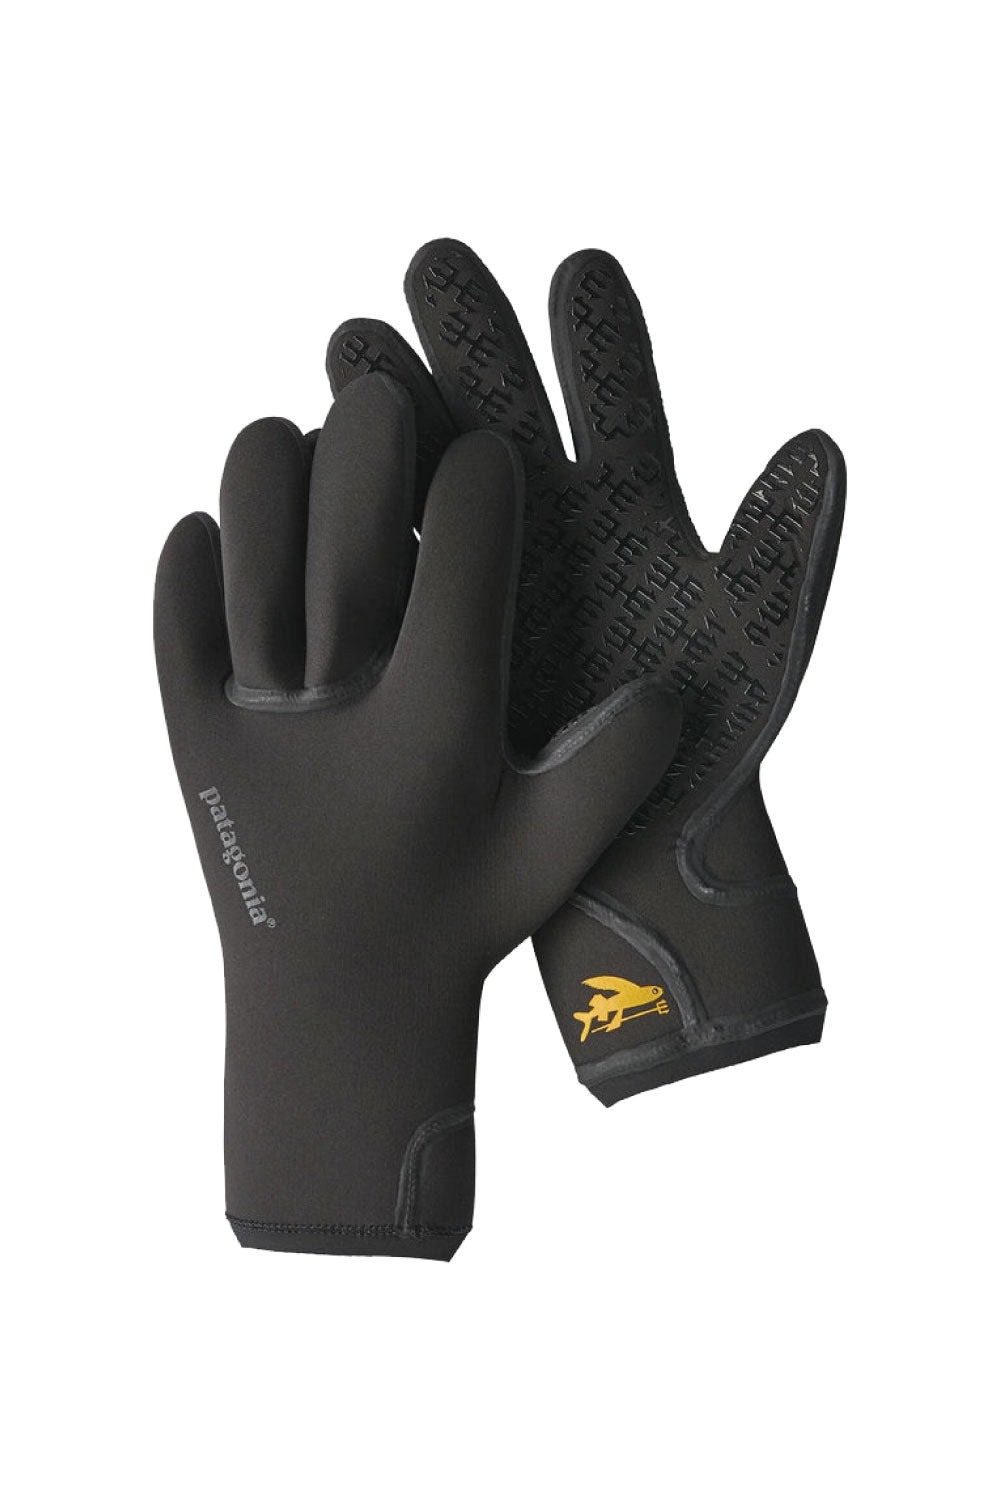 Patagonia R3 Yulex Wetsuit Gloves